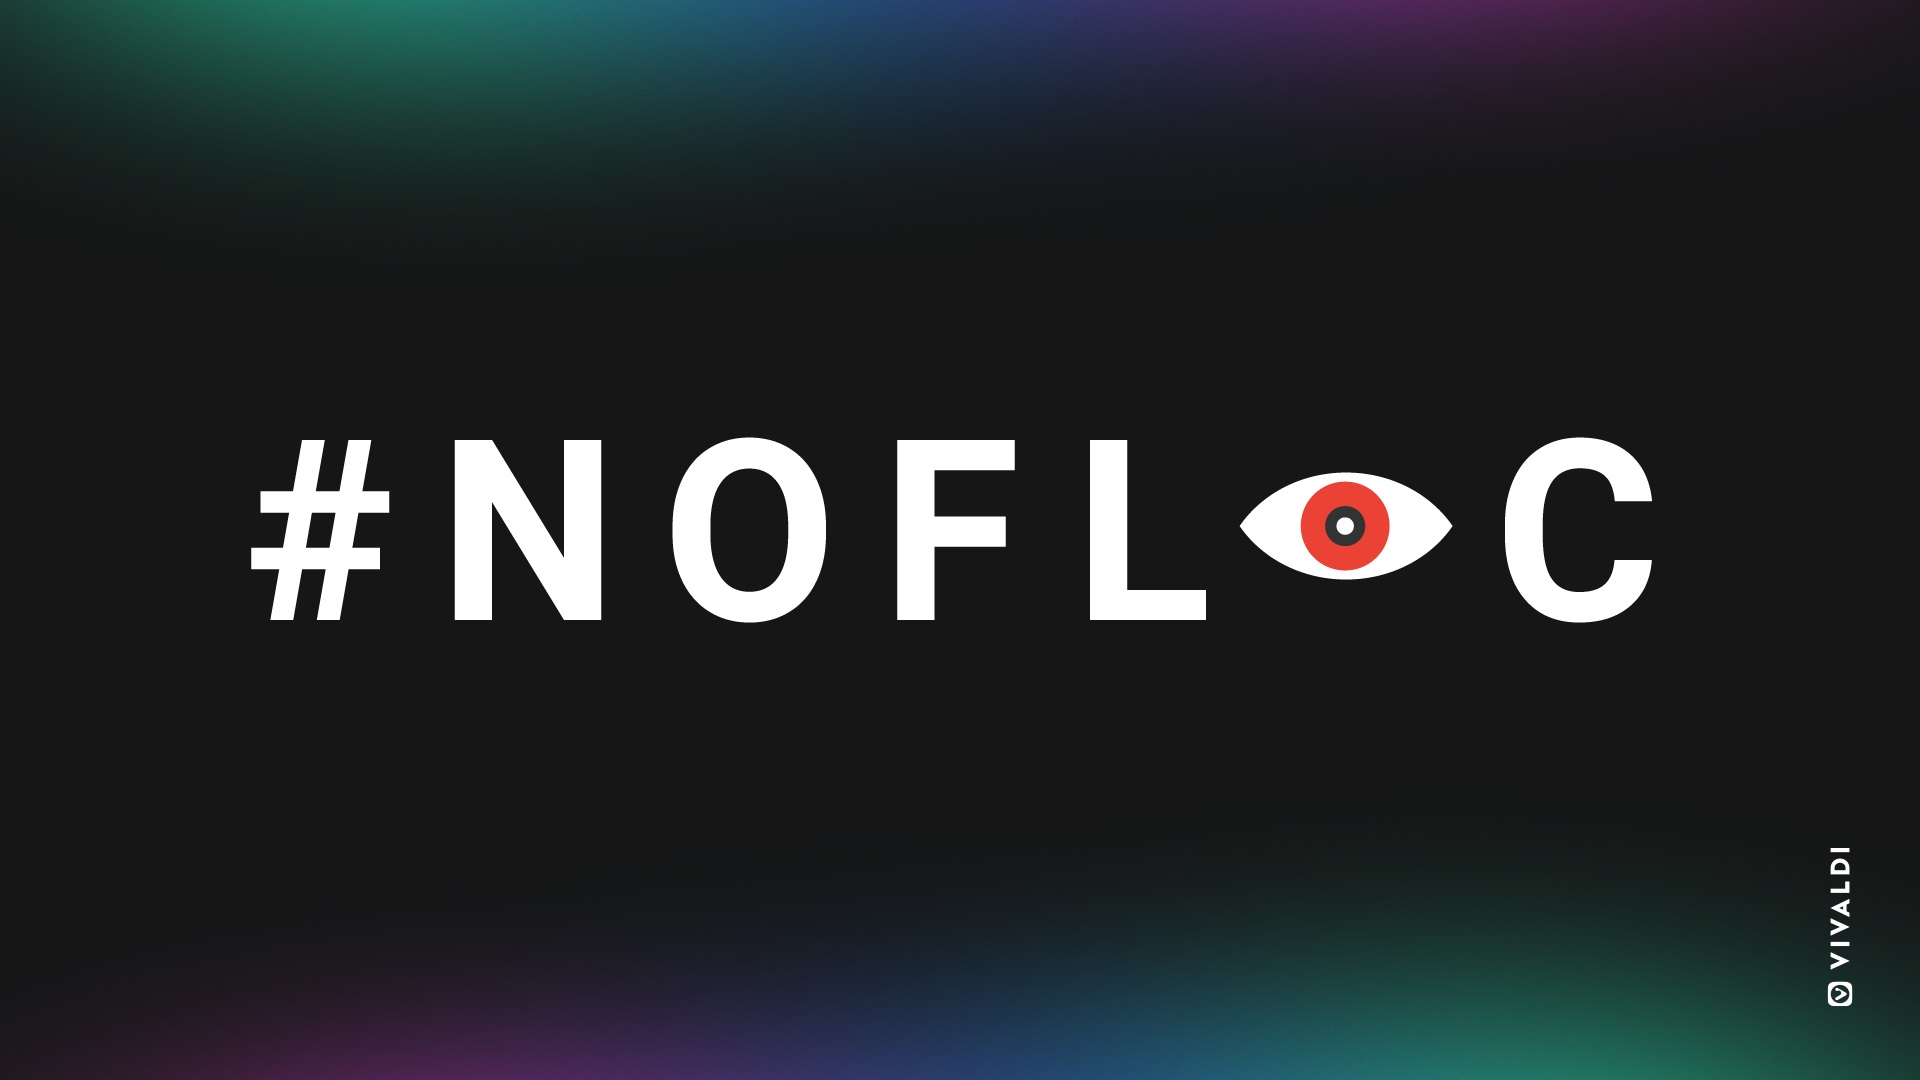 #Vivaldi浏览器的NoFLoC活动，在深色背景上显示标签